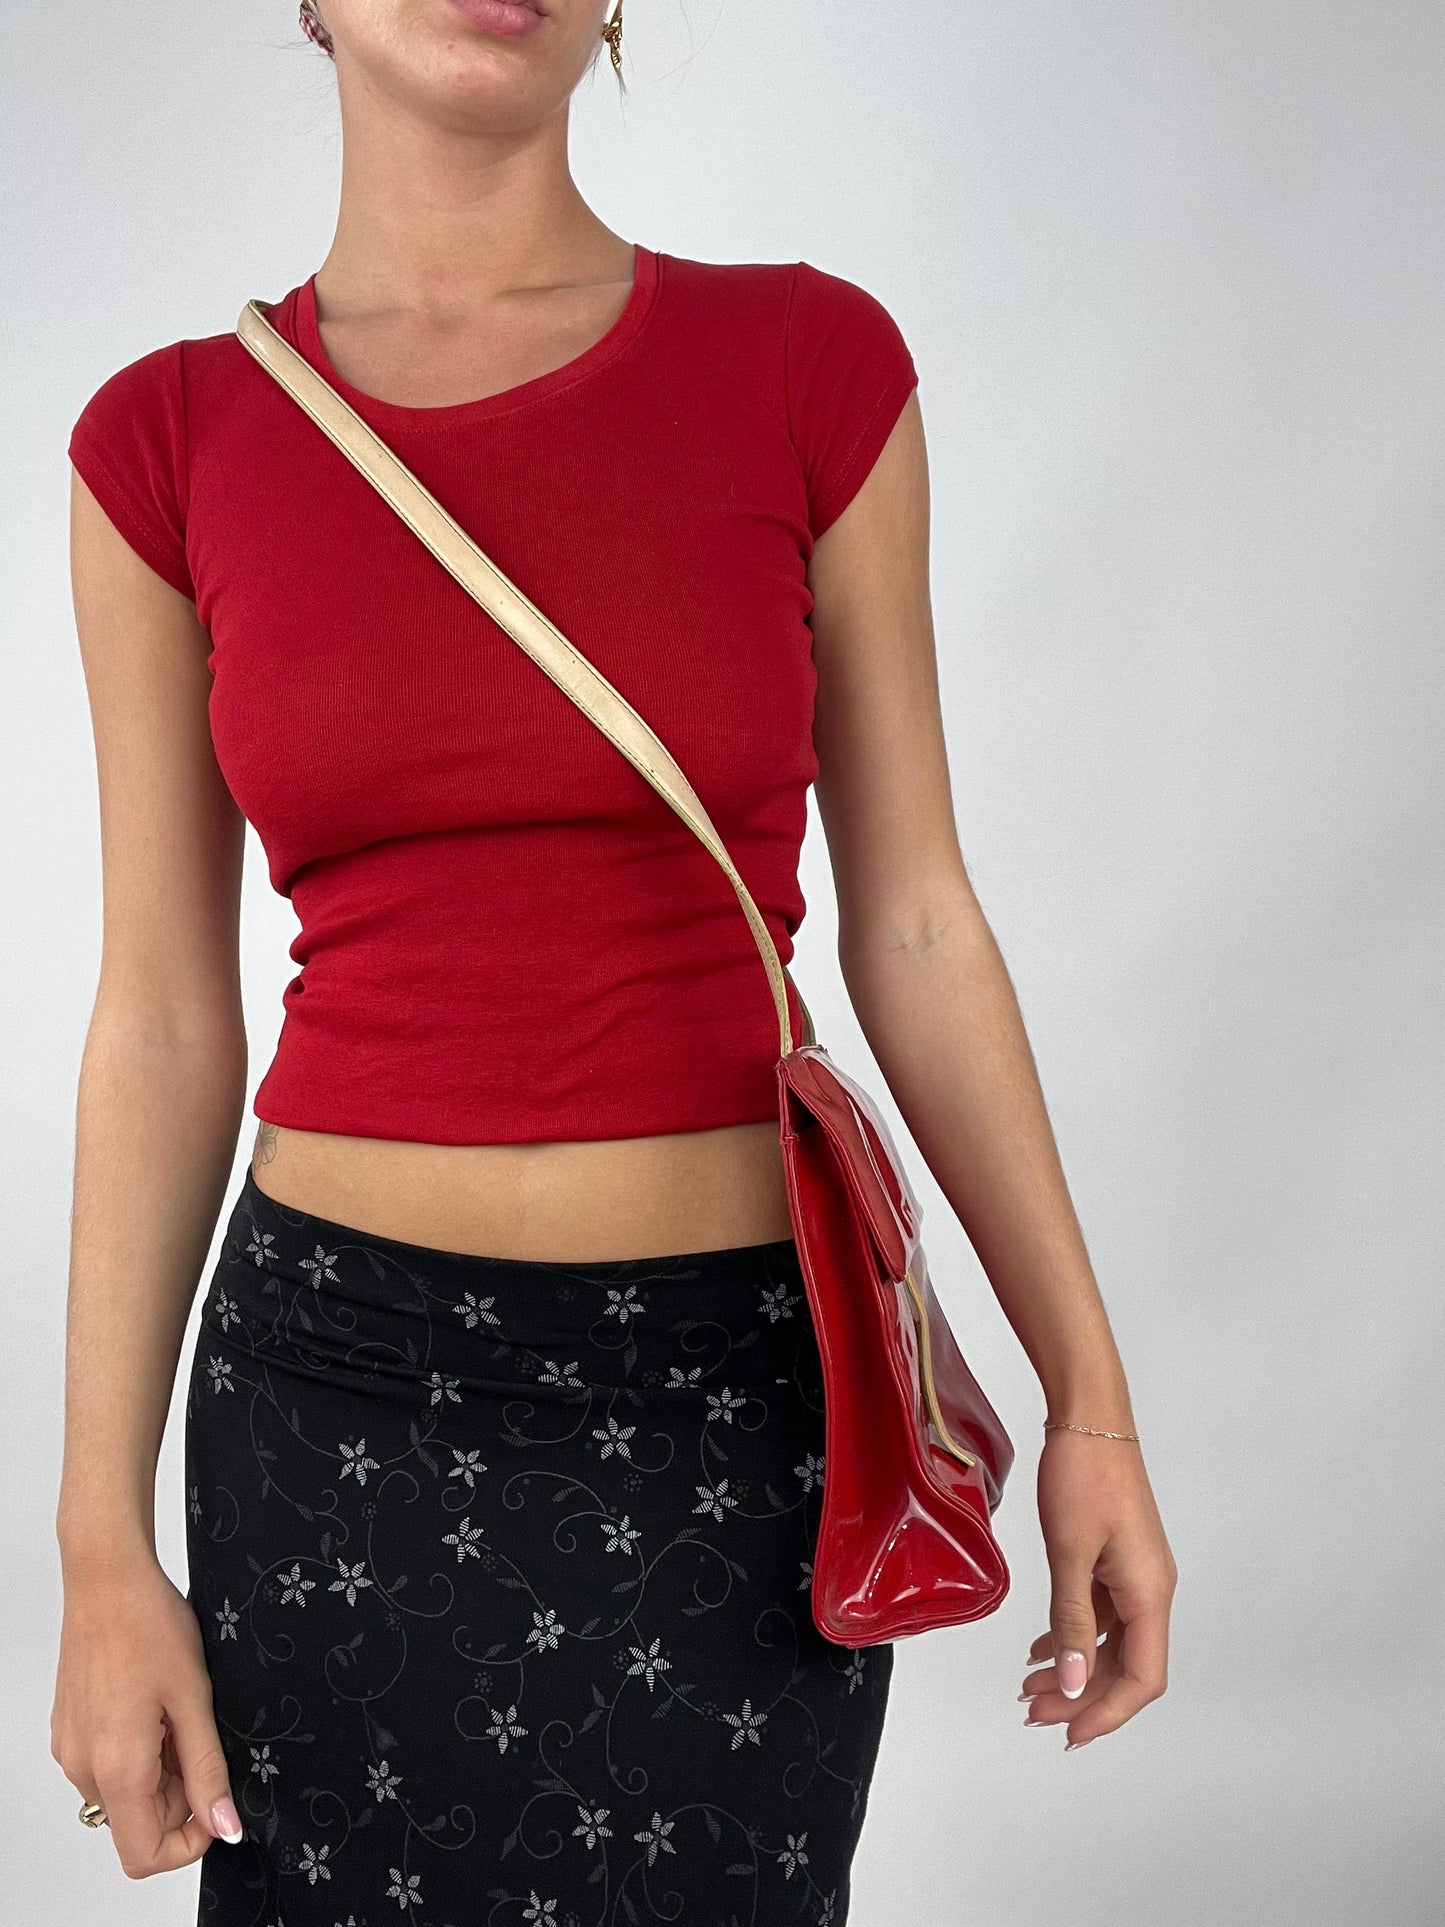 TAYLOR SWIFT DROP | medium red crossbody bag with beige strap